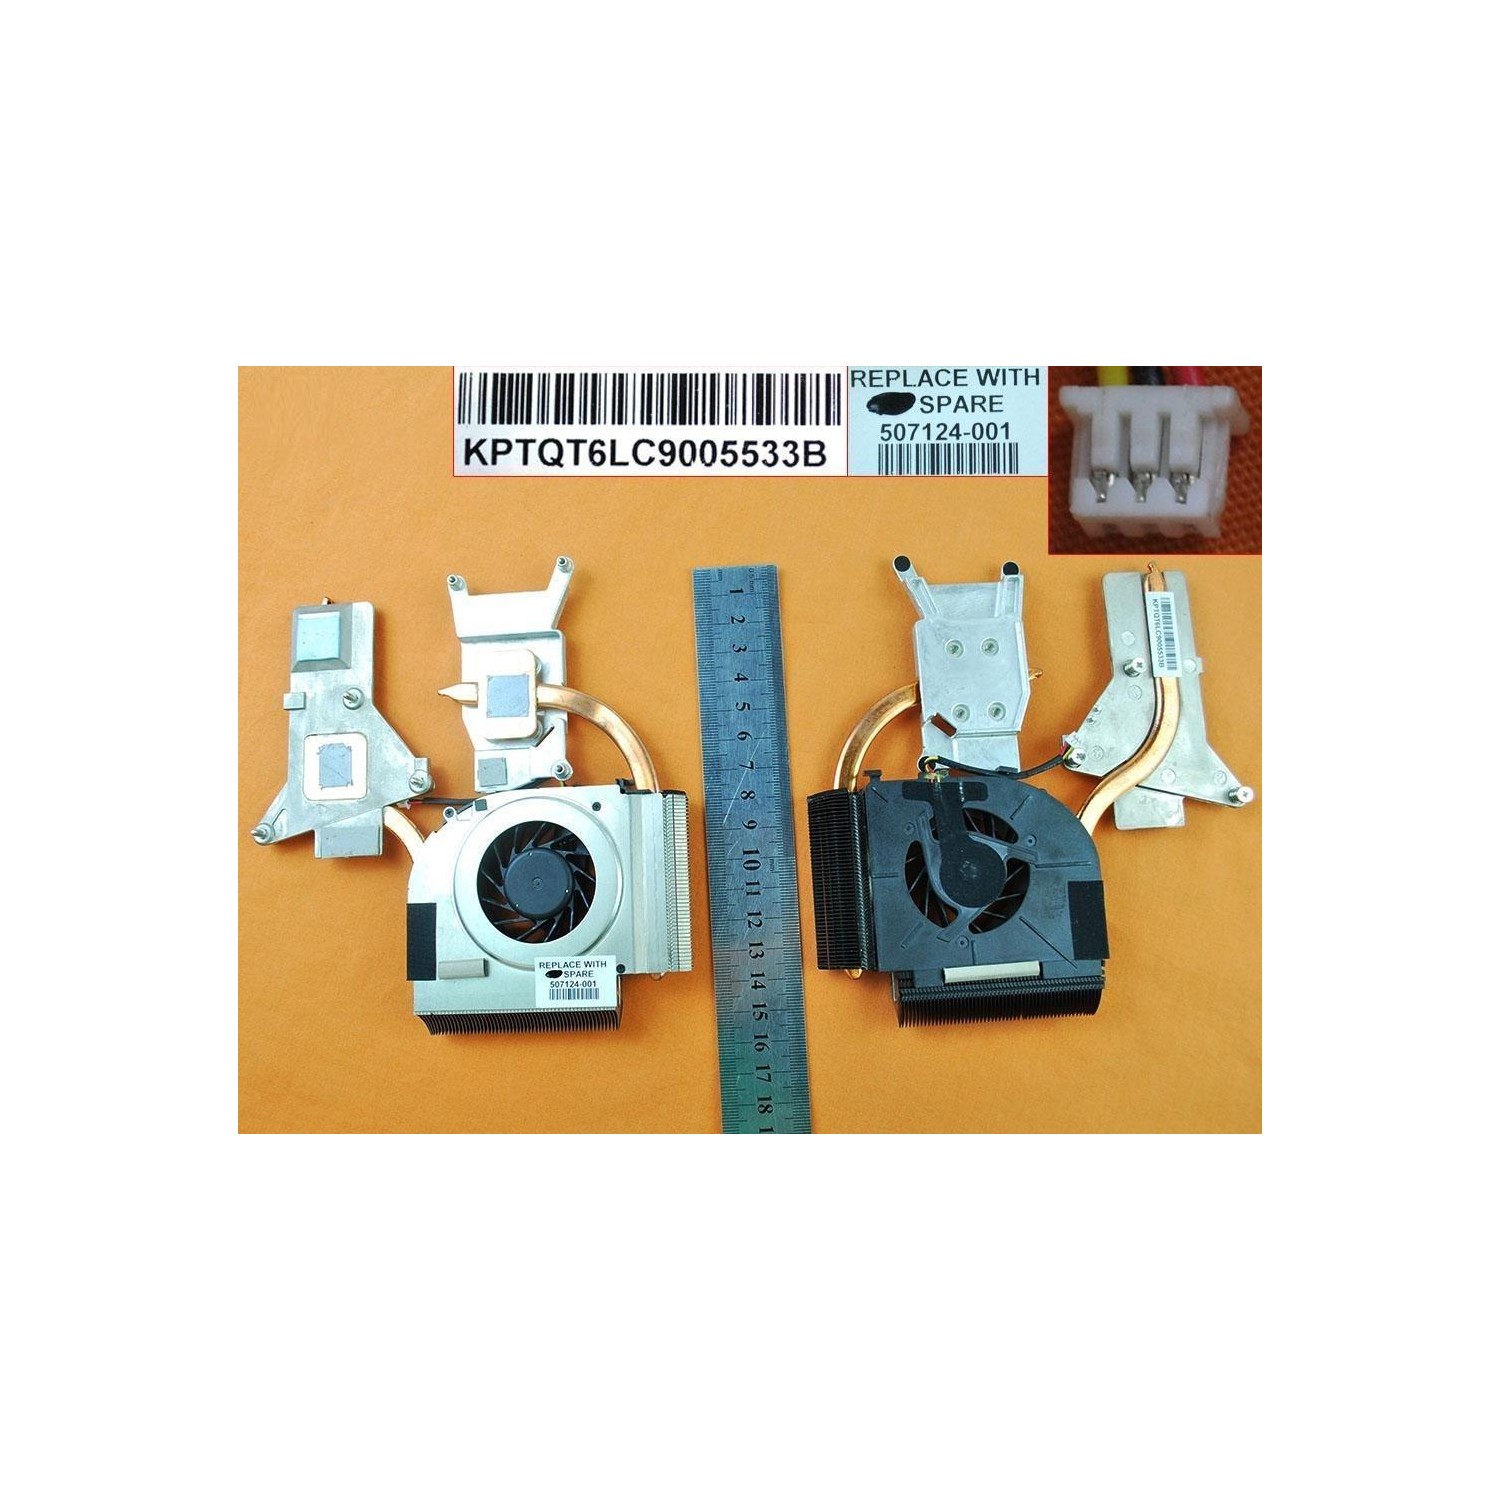 Ventilador para HP DV5-1000 DV5T-1000(para Intel Discrete Video card,Heatsink Version 1) 507124-001